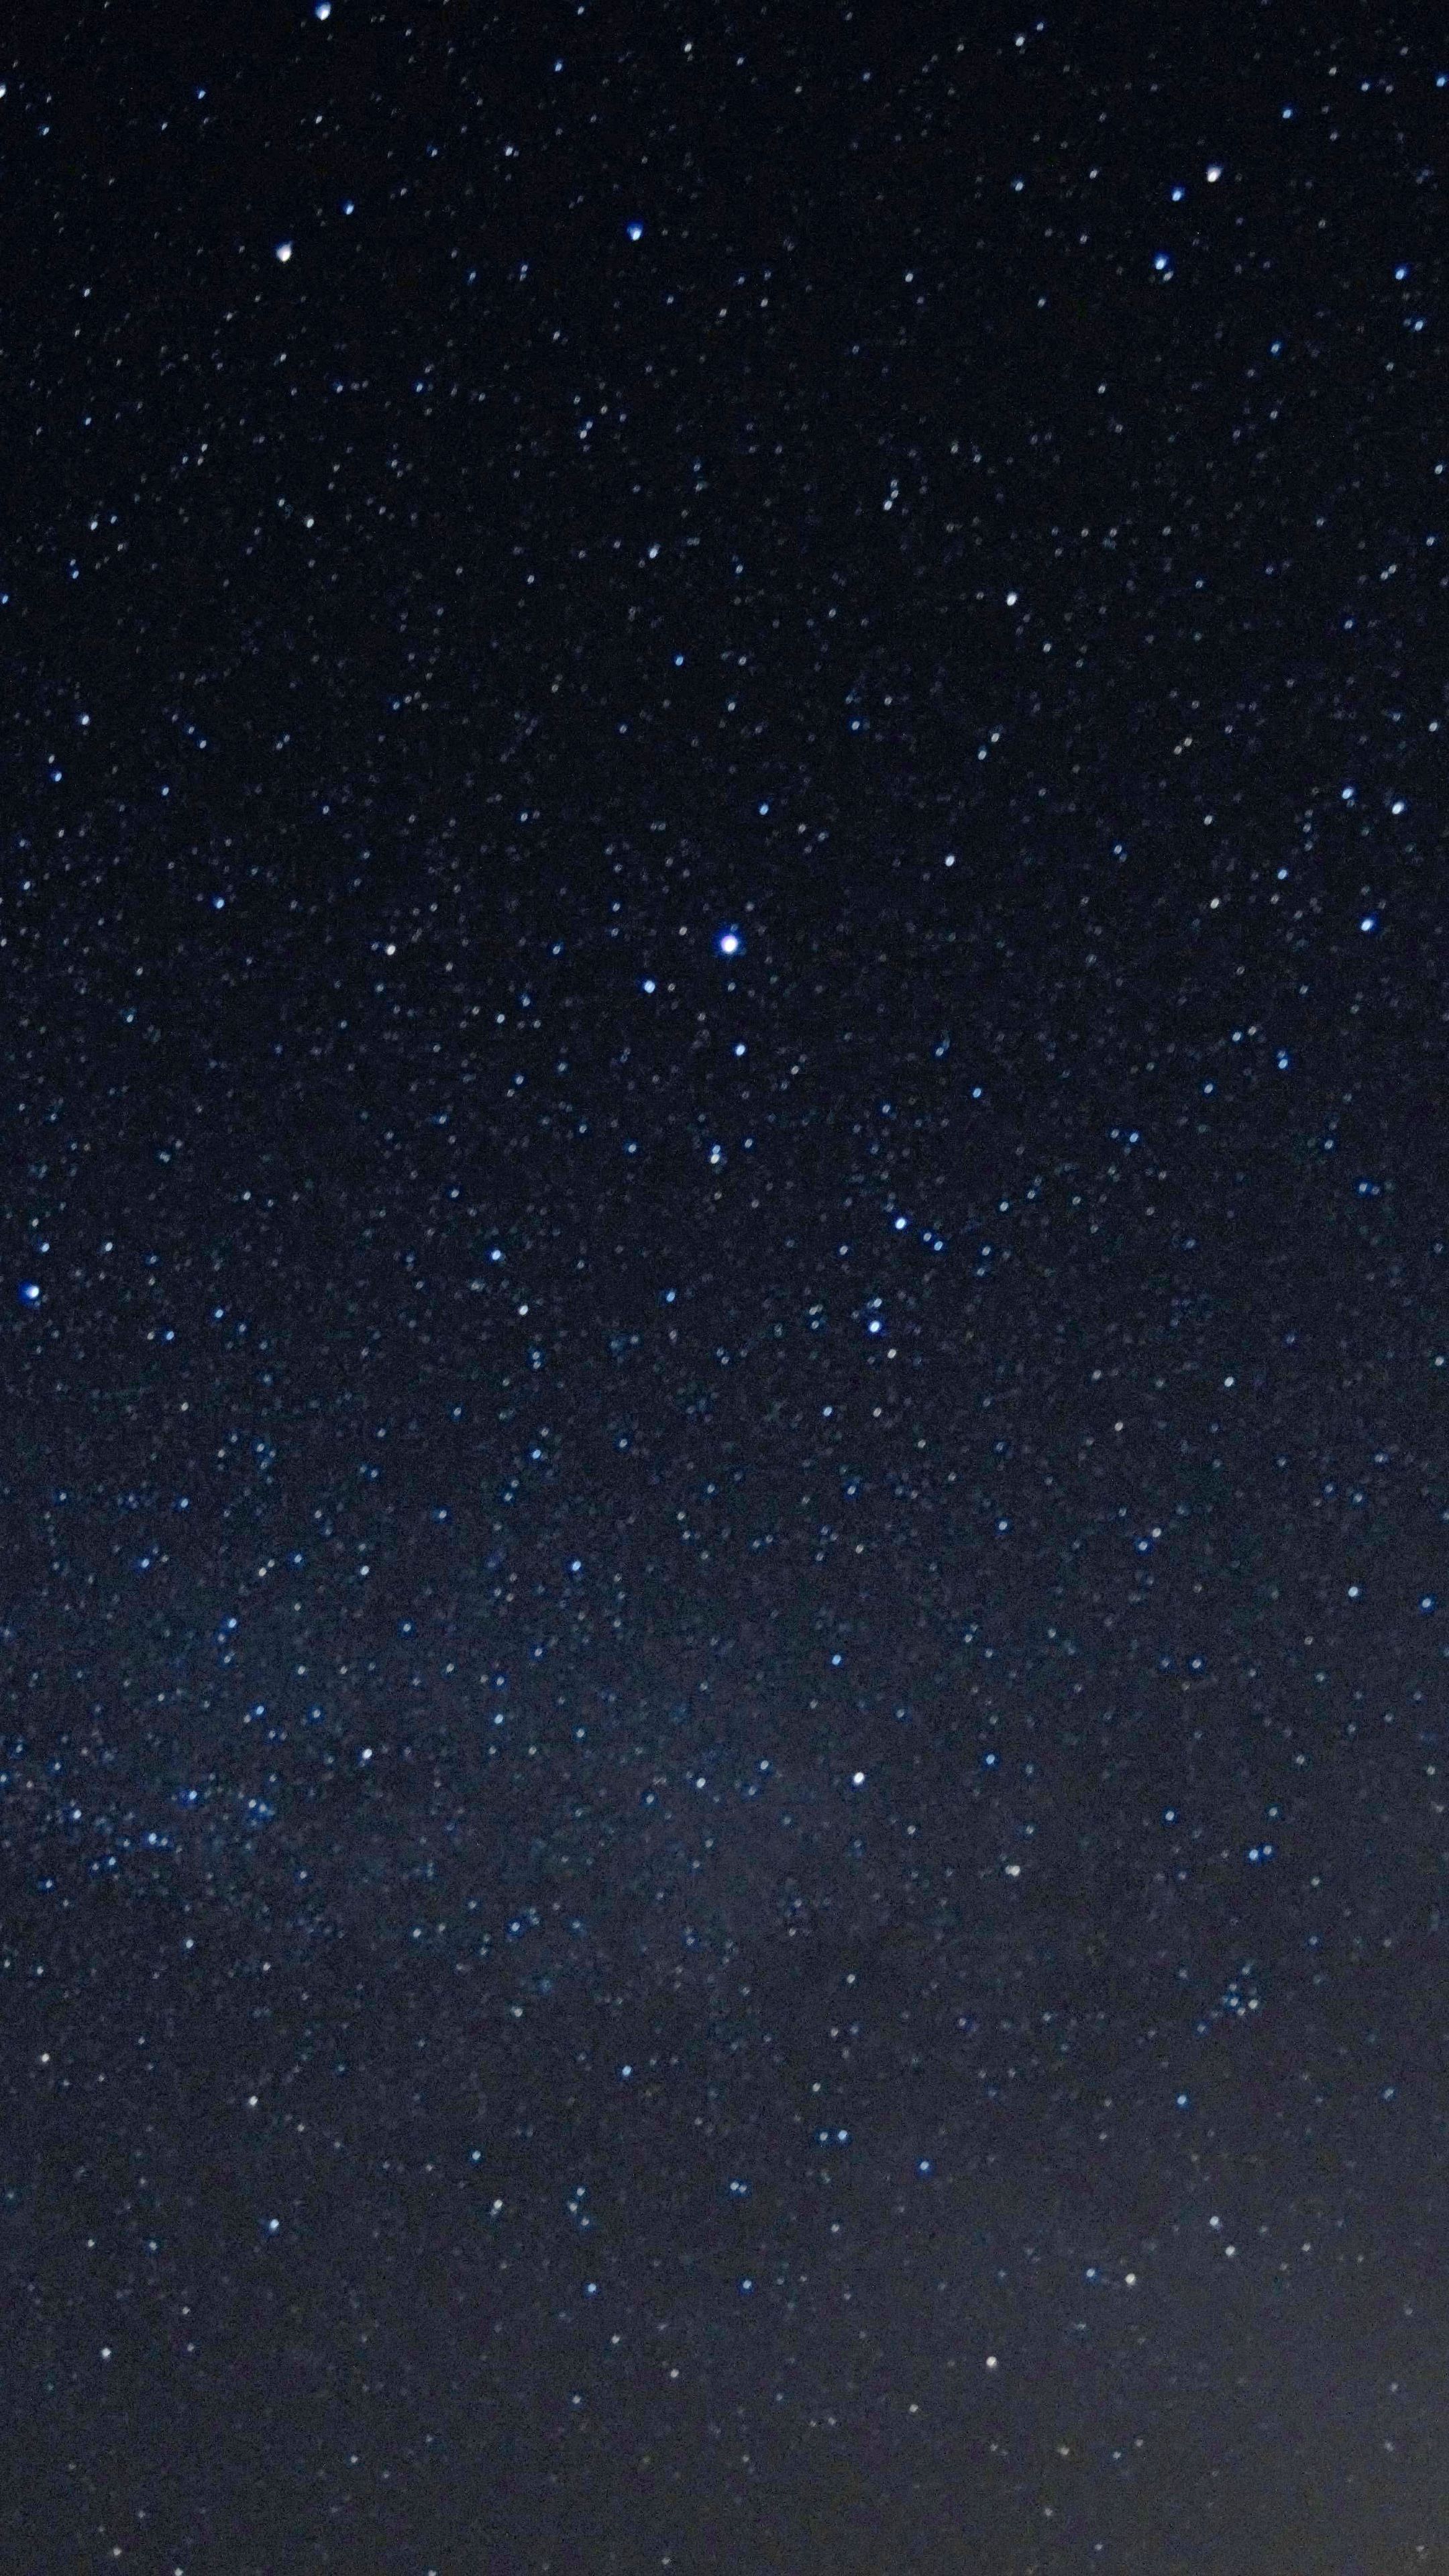 Sky #starrysky #night #stars #wallpaper HD 4k background for android :). Star wallpaper, Sky, Starry sky